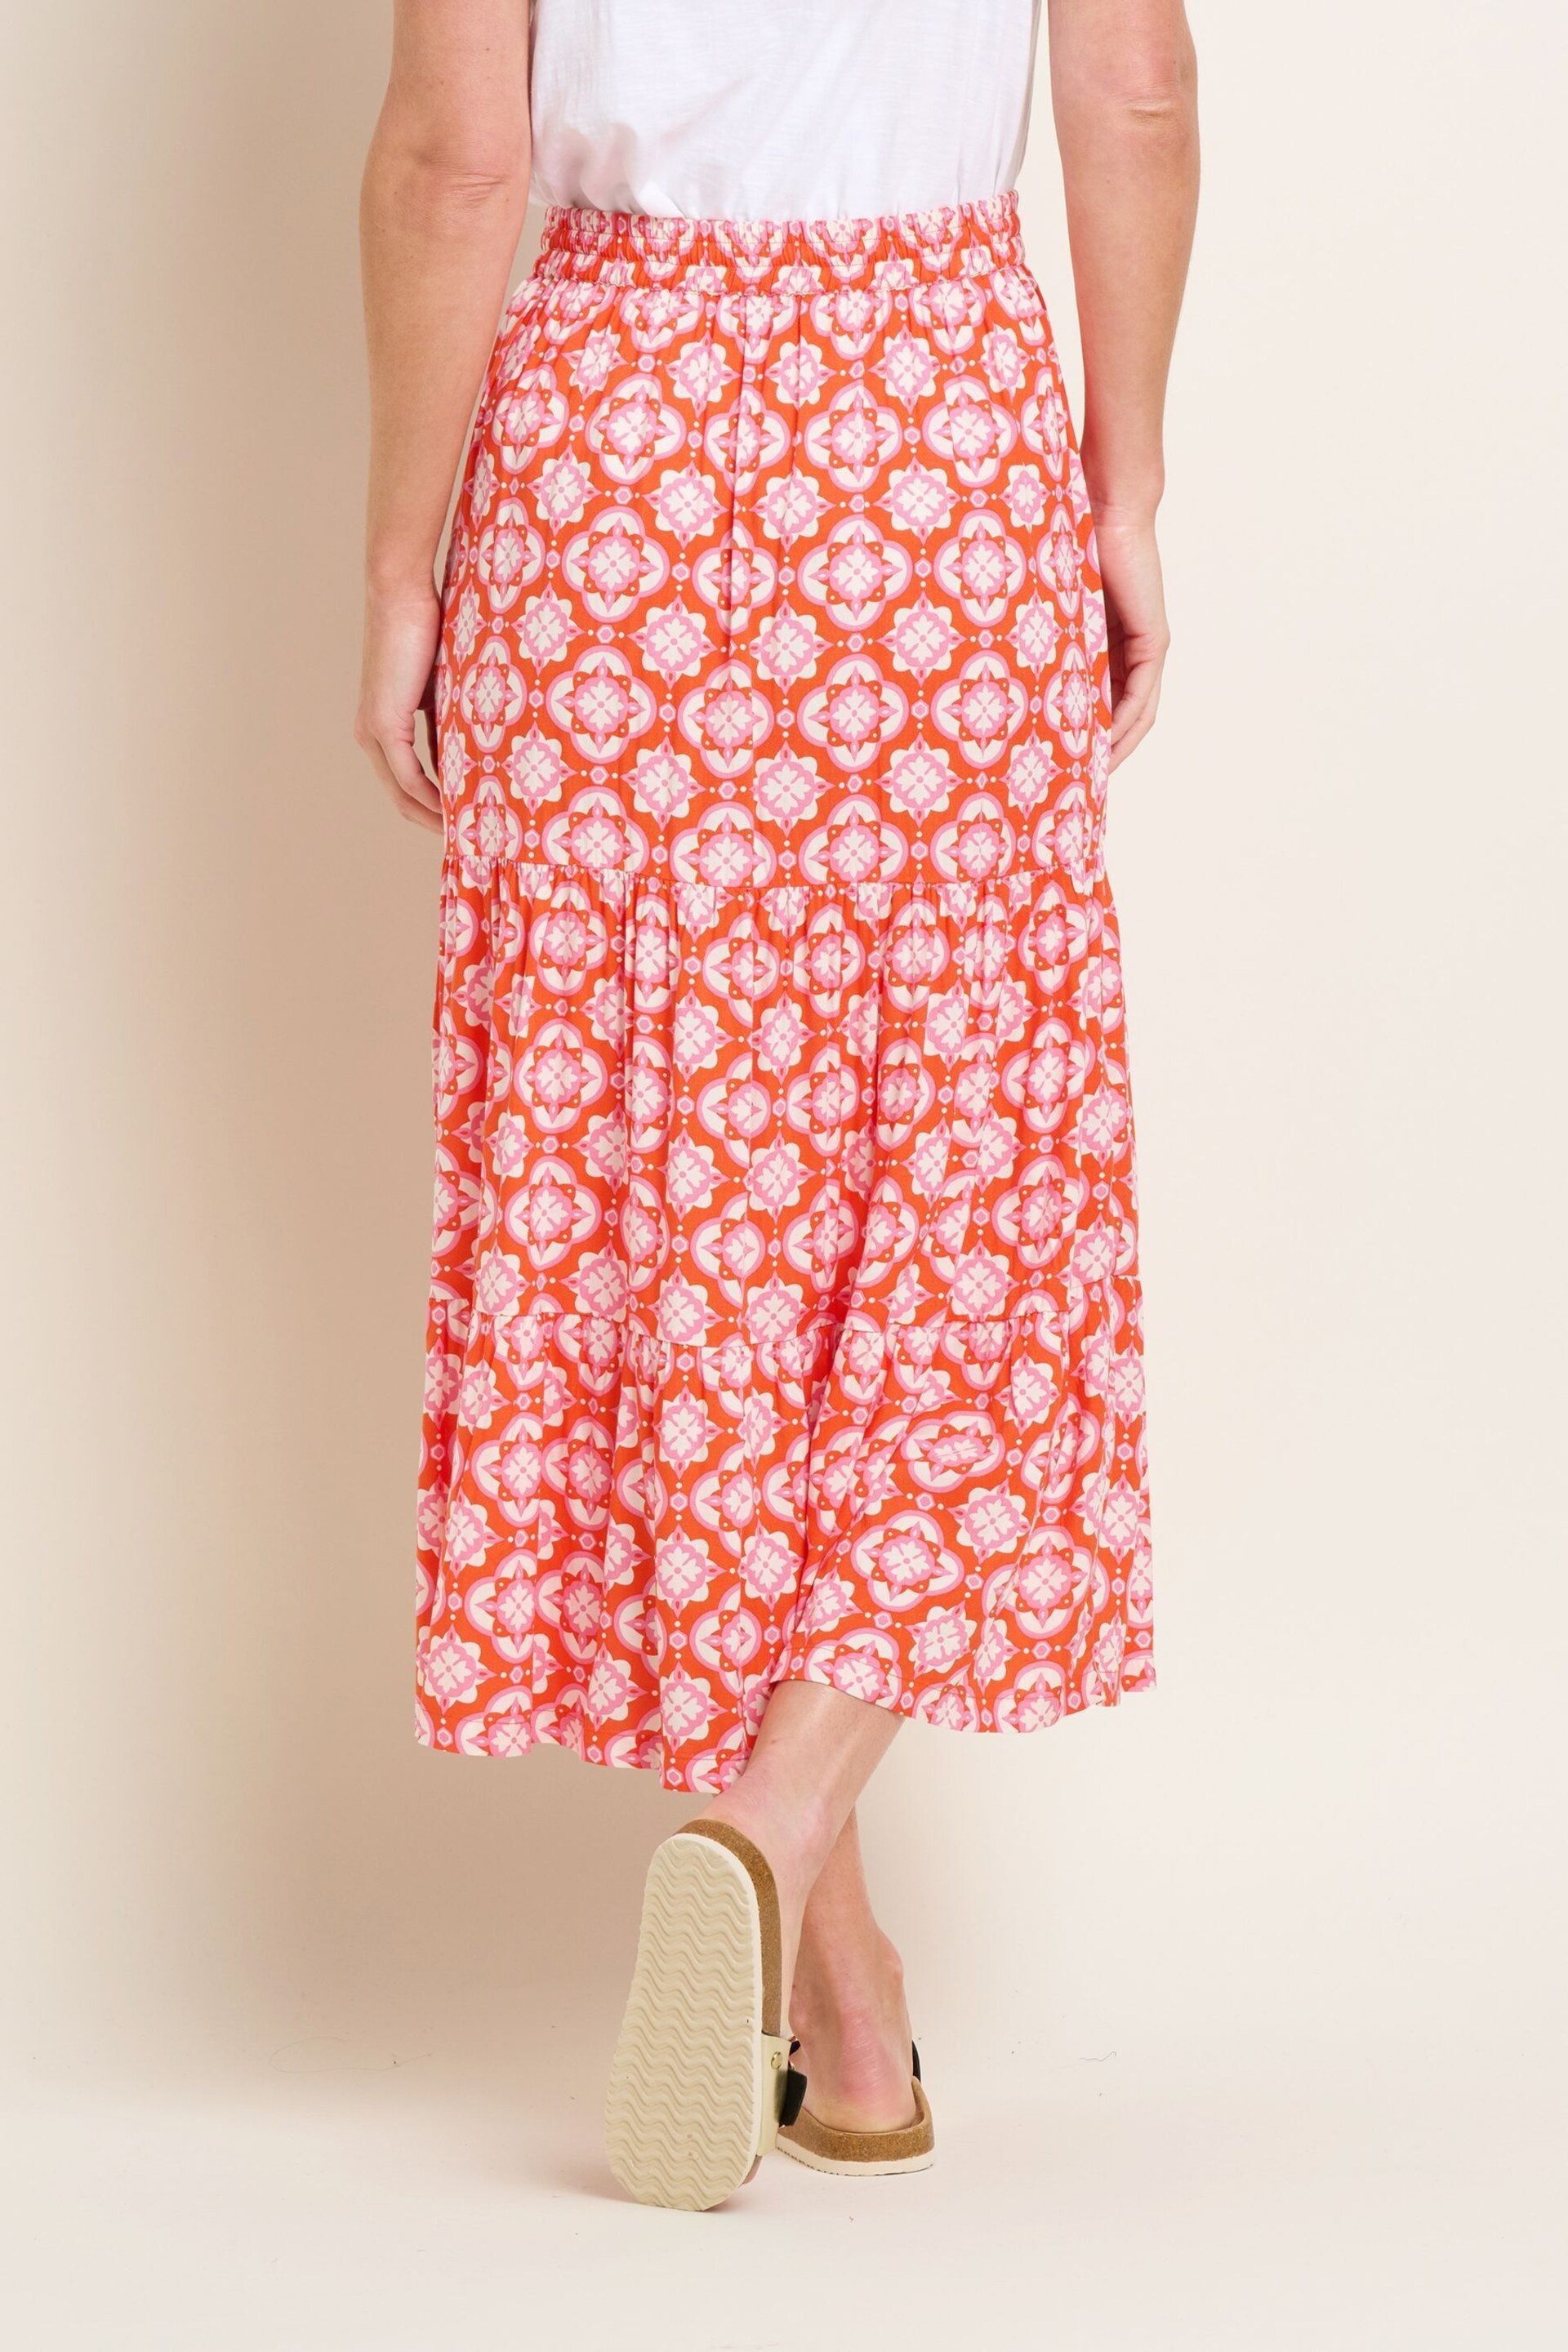 Brakeburn Pink Moroccan Tile Skirt - Image 2 of 4